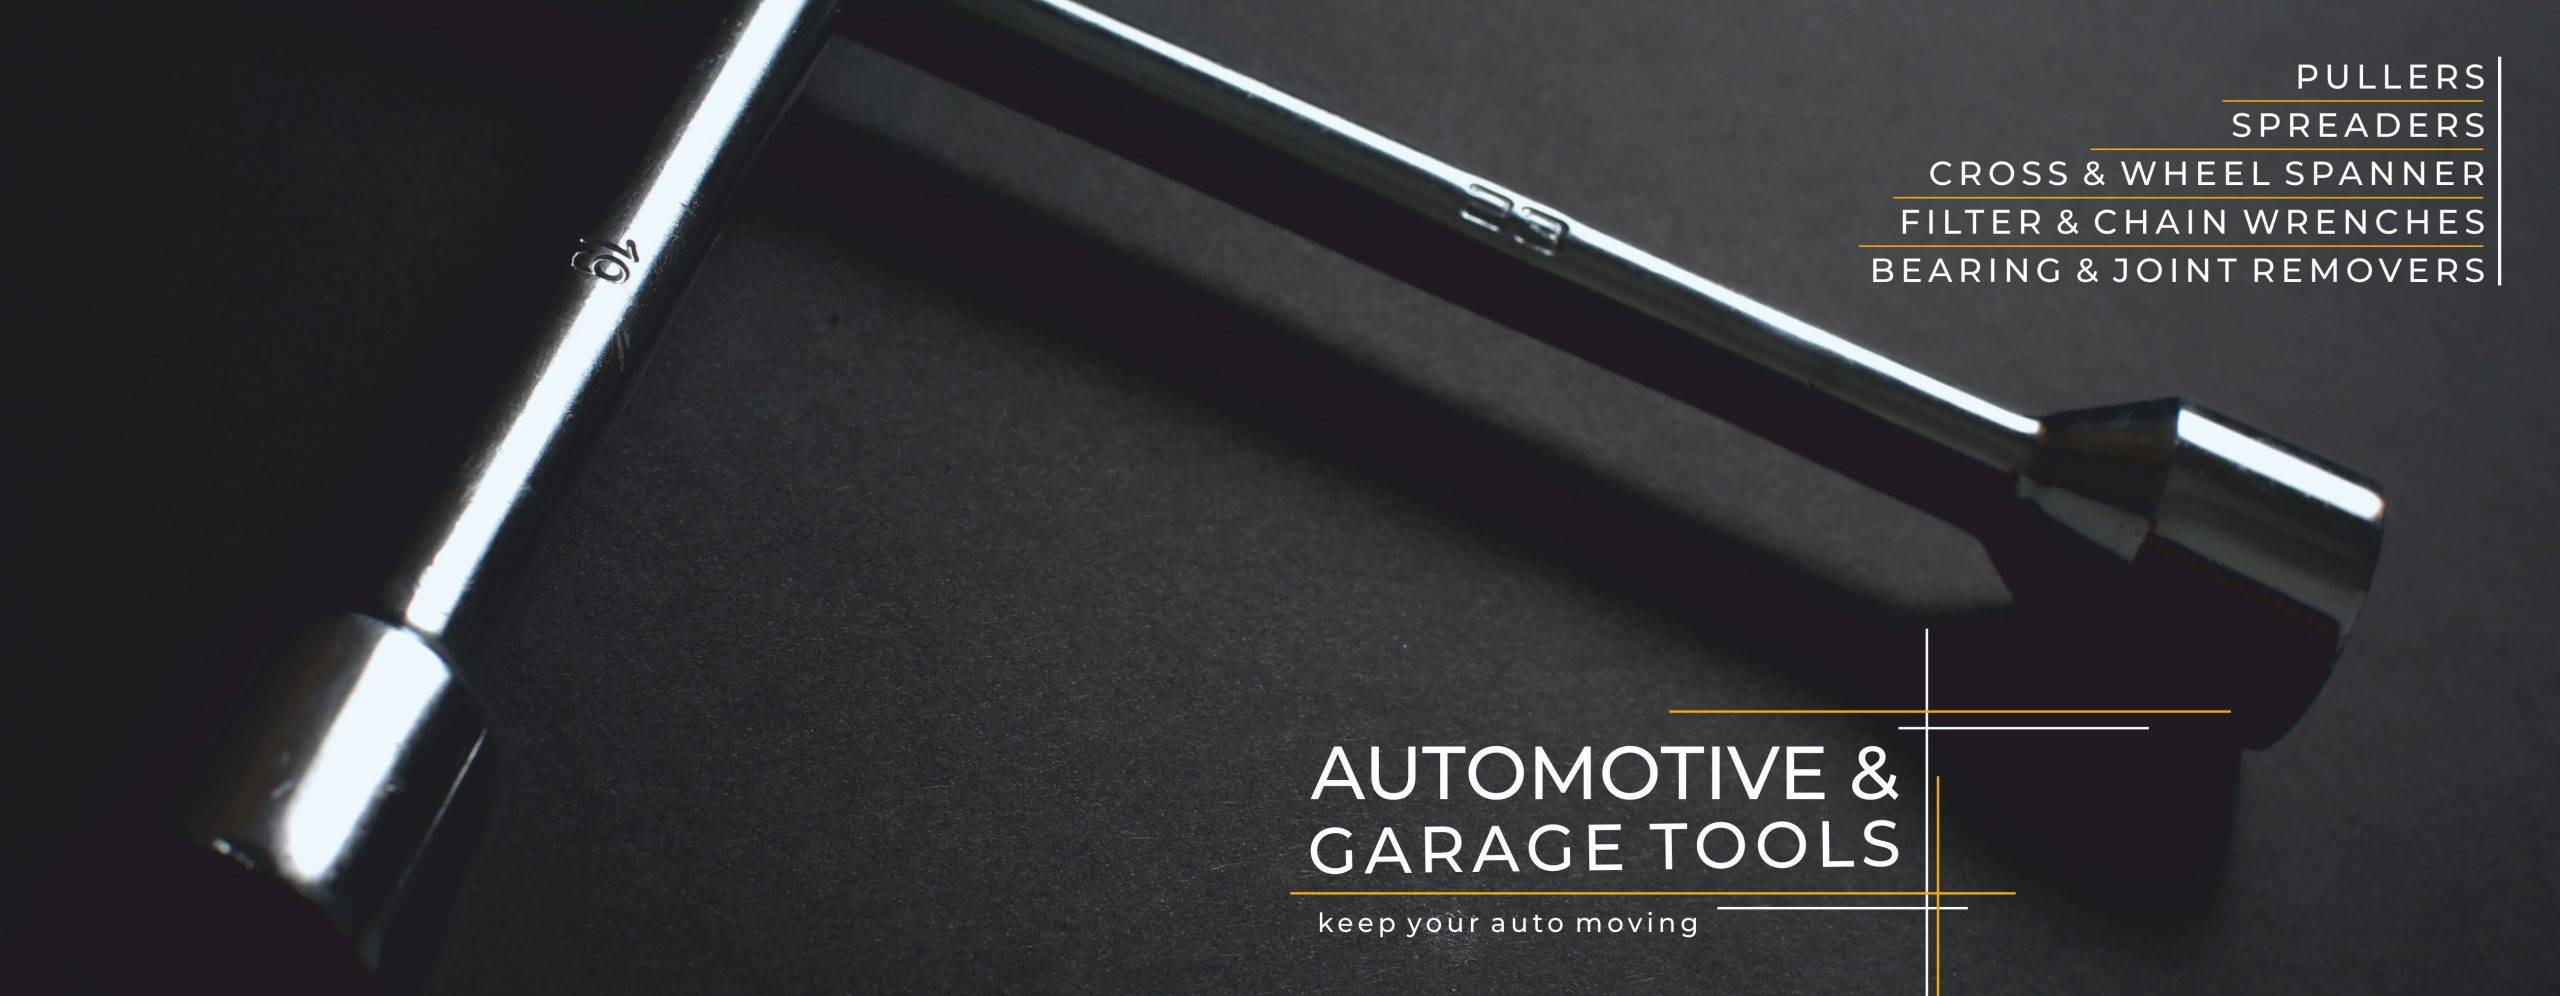 Automotive & Garage Tools Banner Image - JCBL